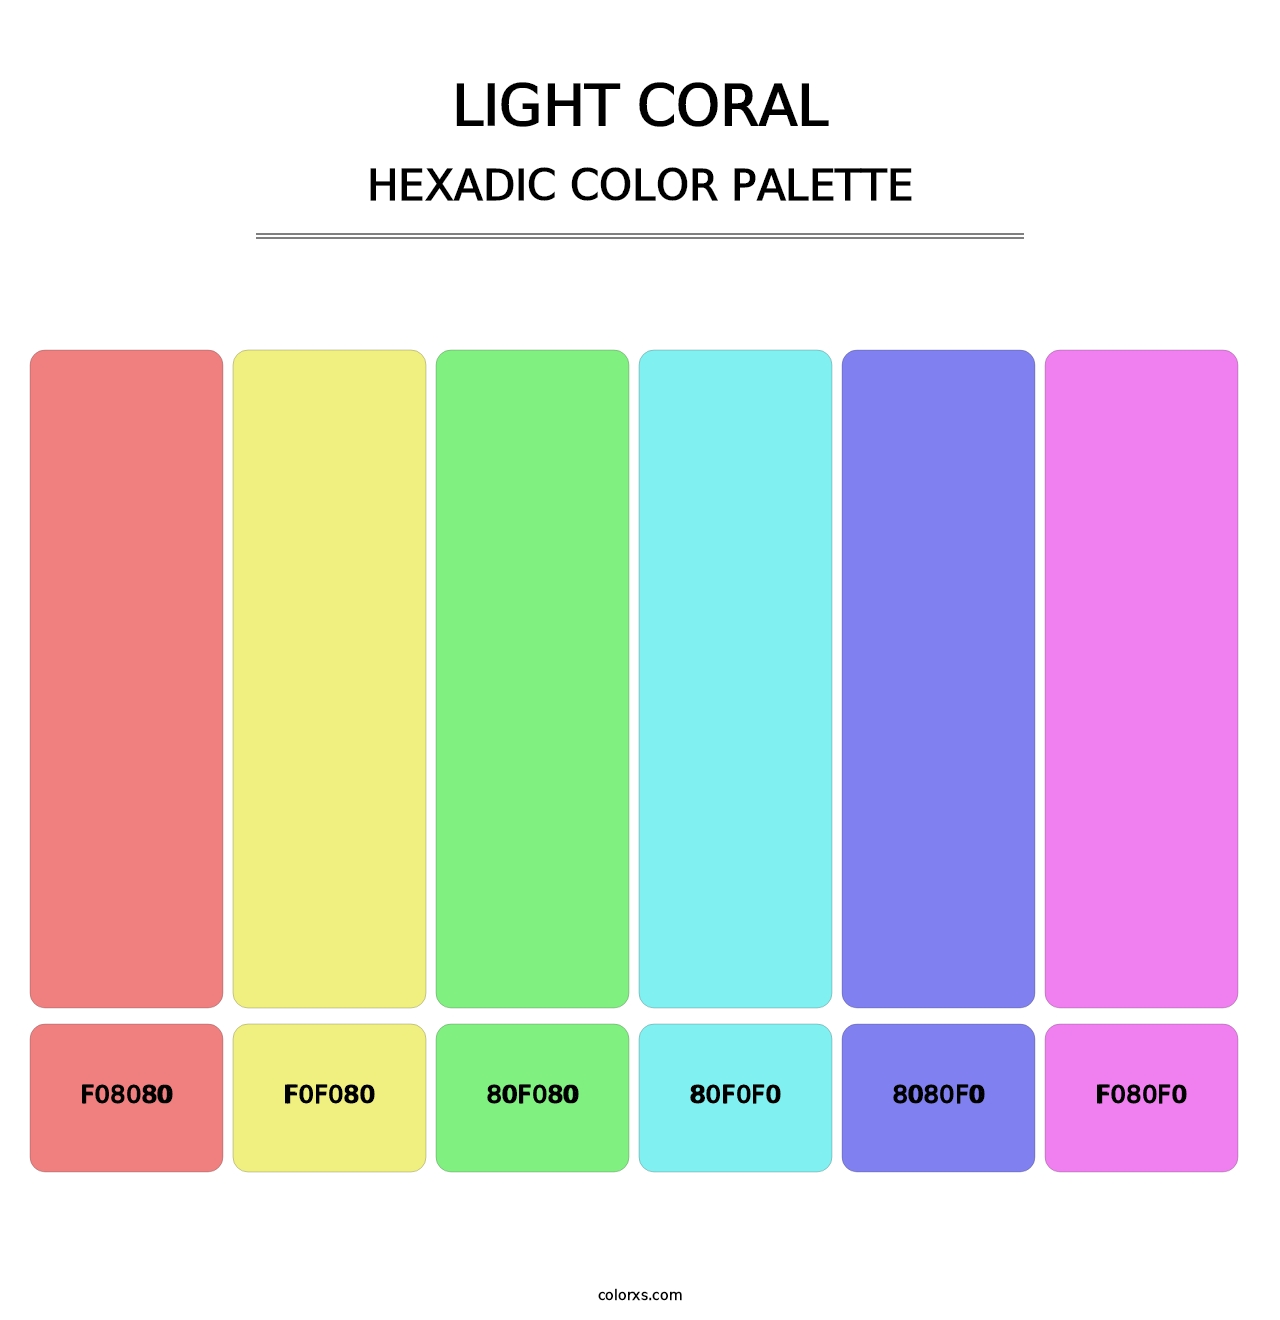 Light Coral - Hexadic Color Palette